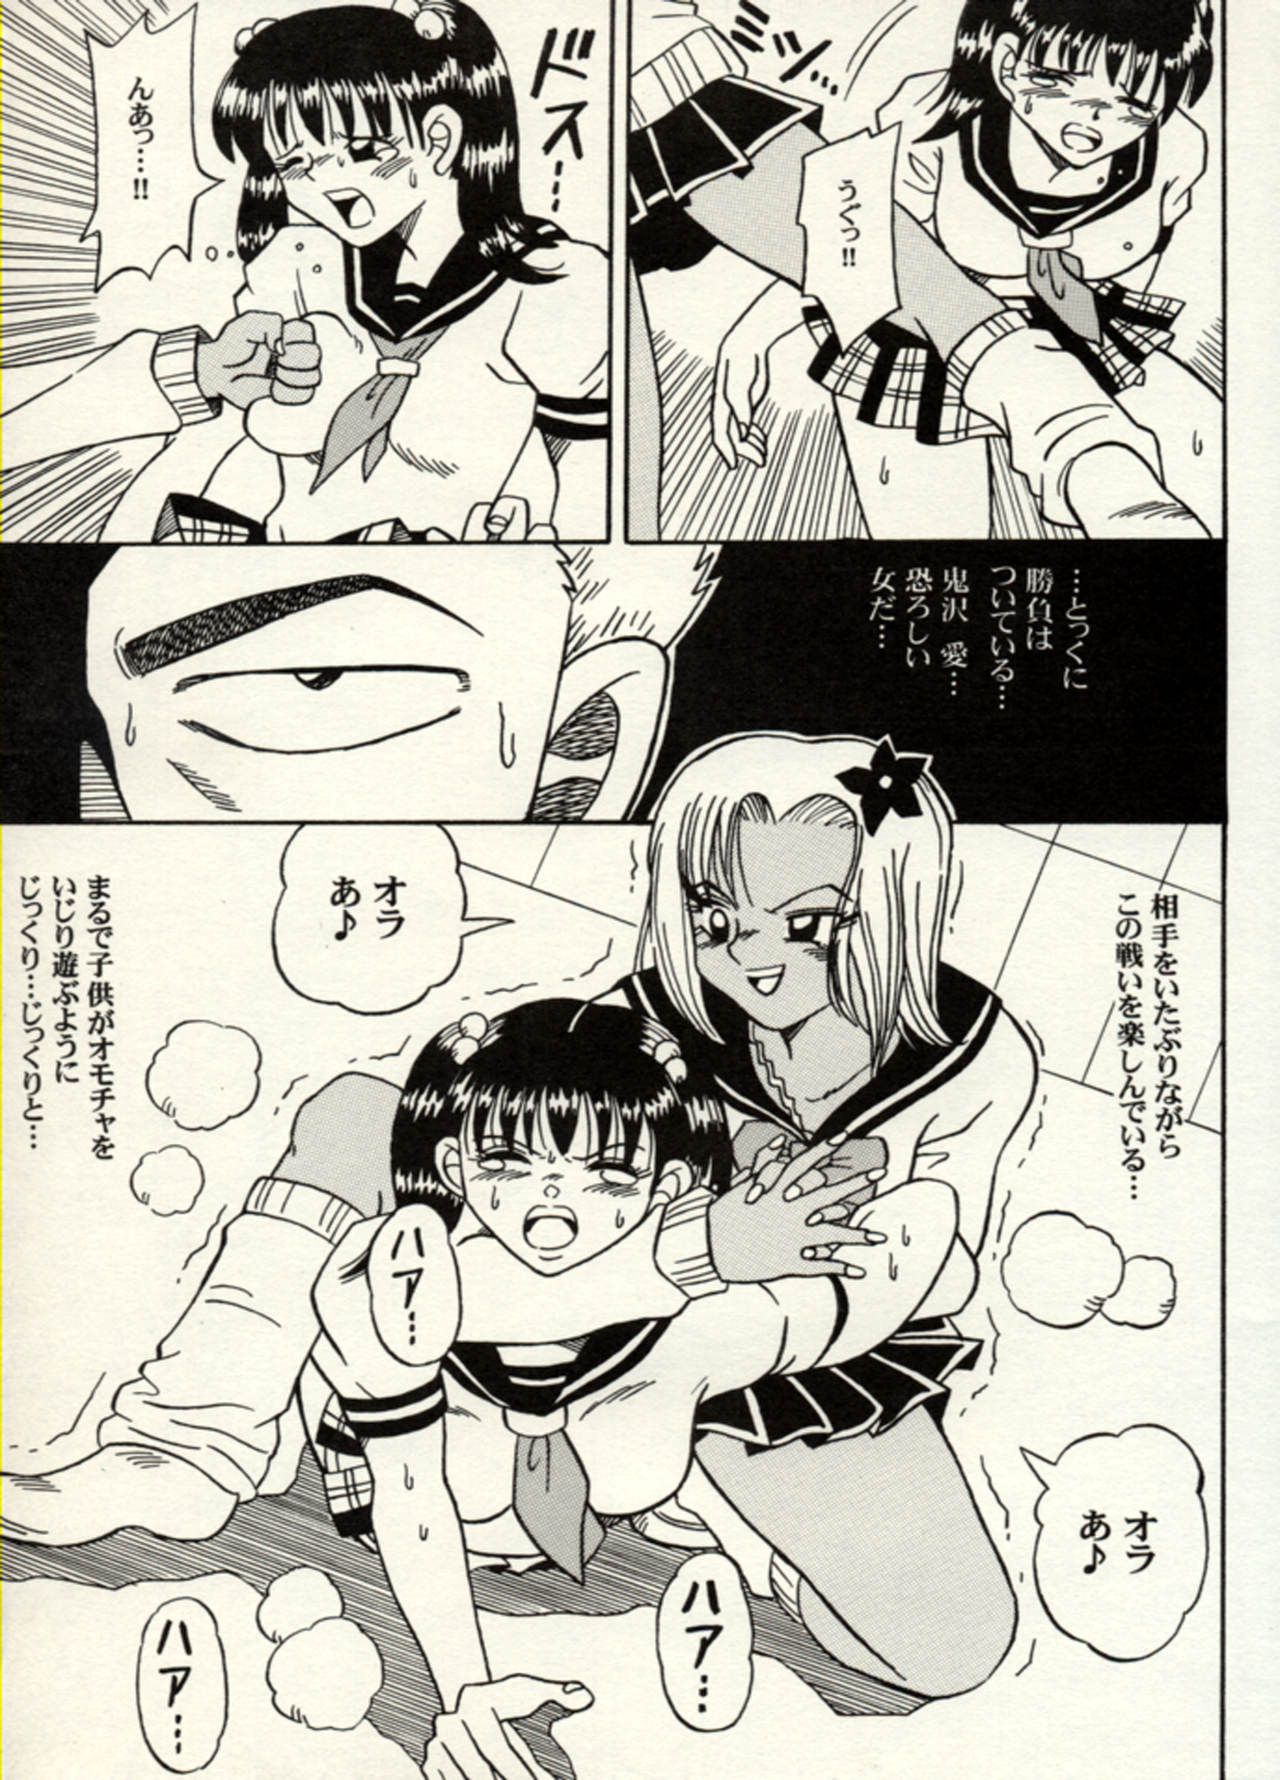 Manga Battle Volume 5 63